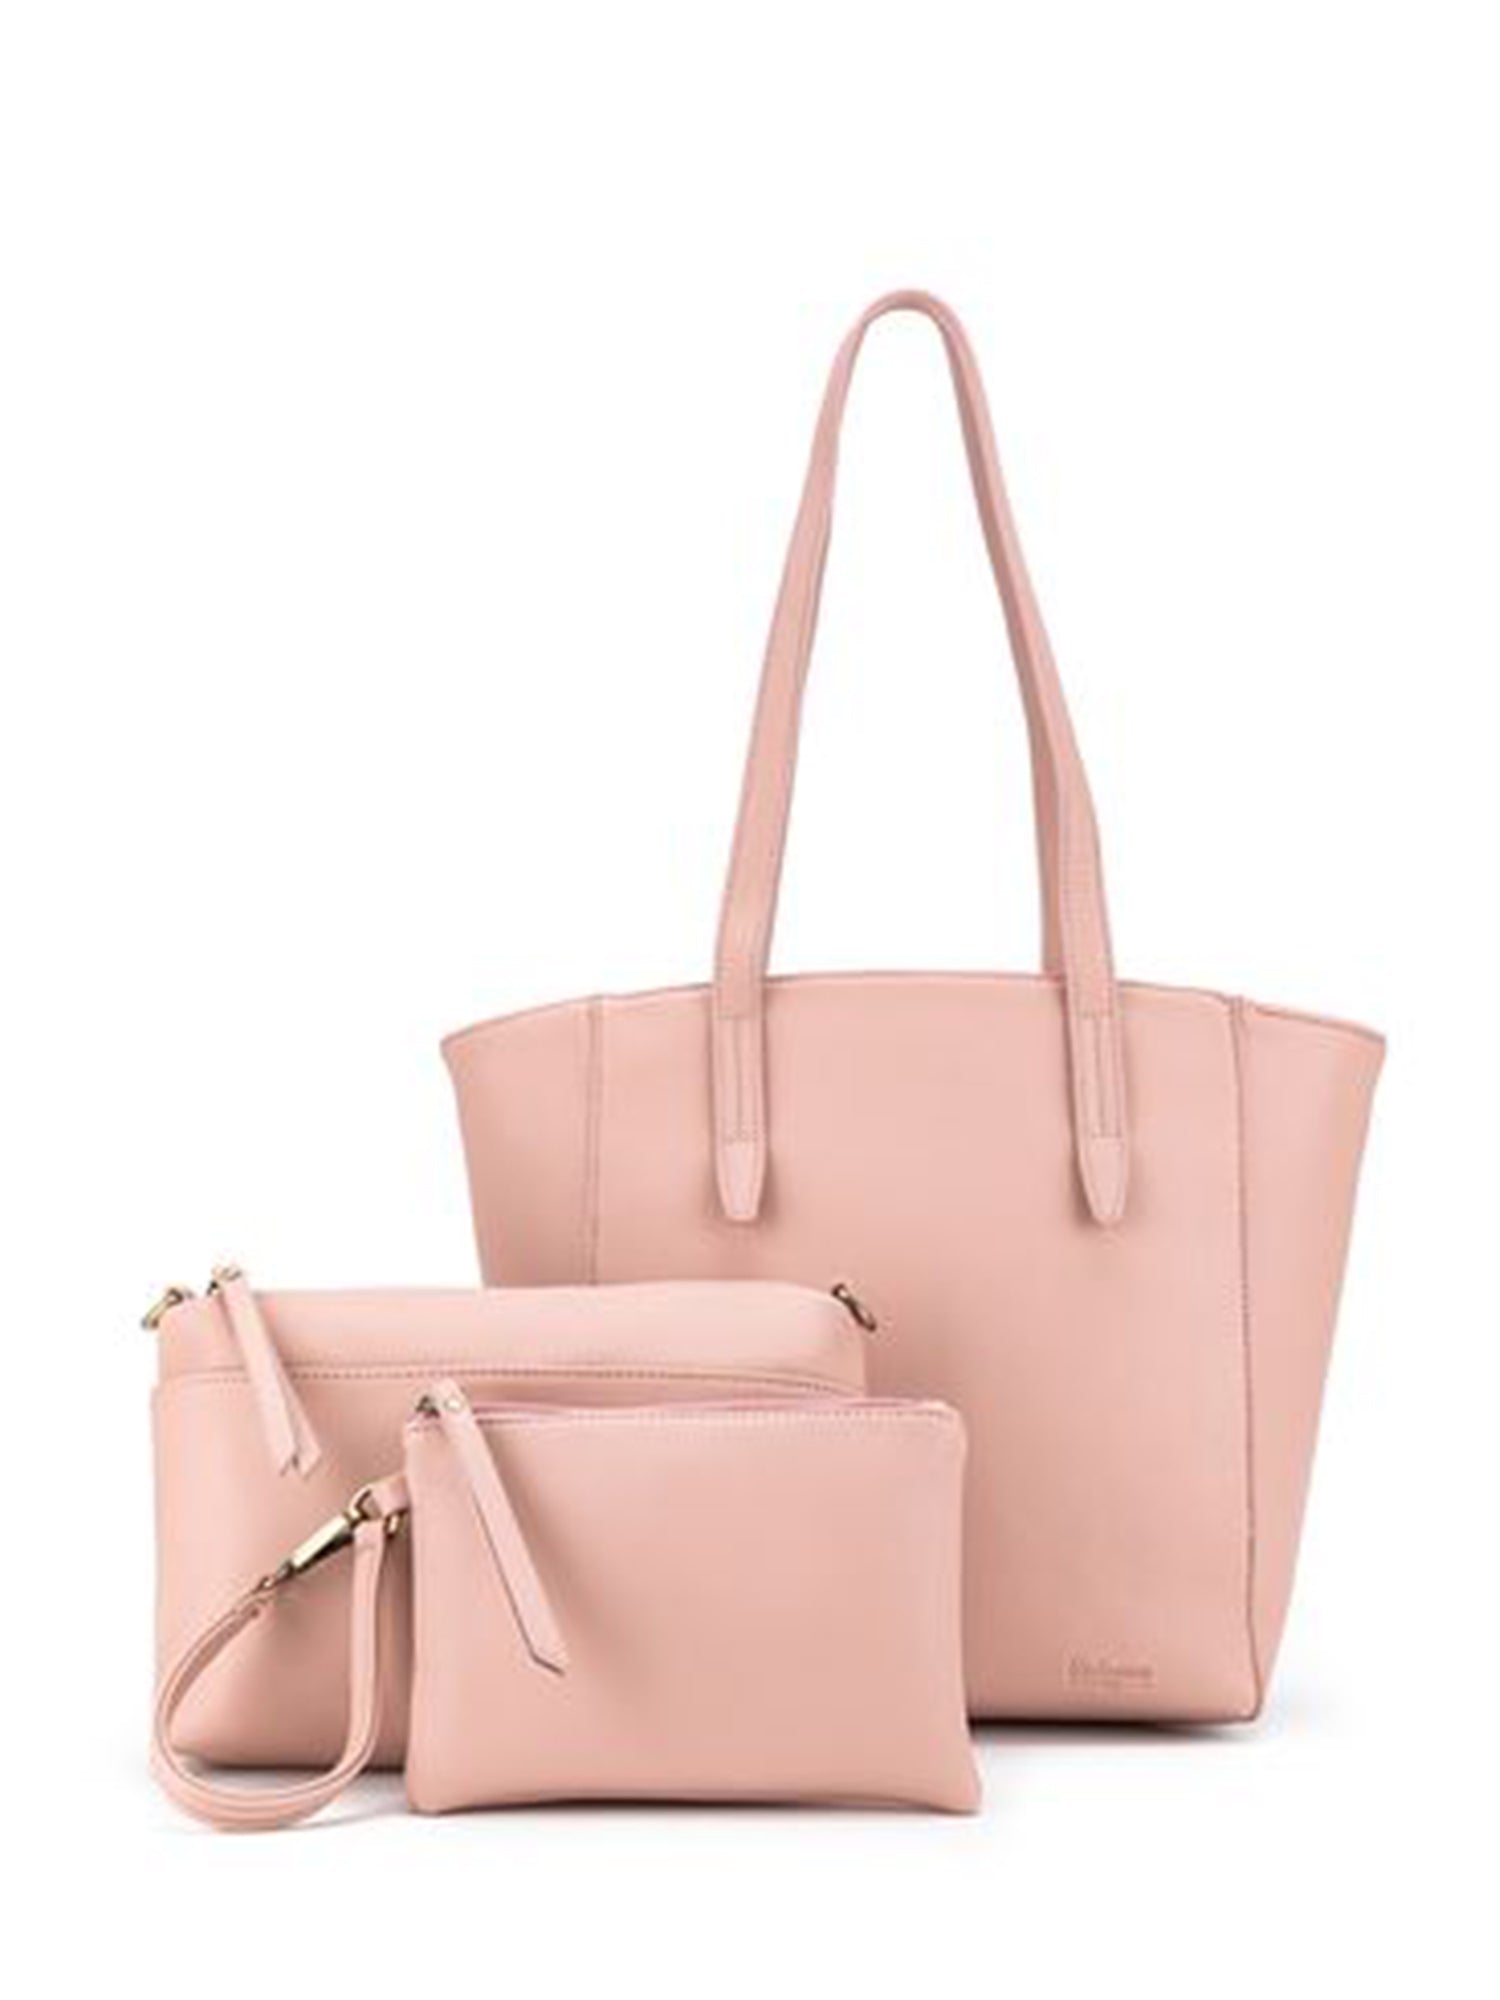 Sabine 3 Piece Handbag Set - Pink